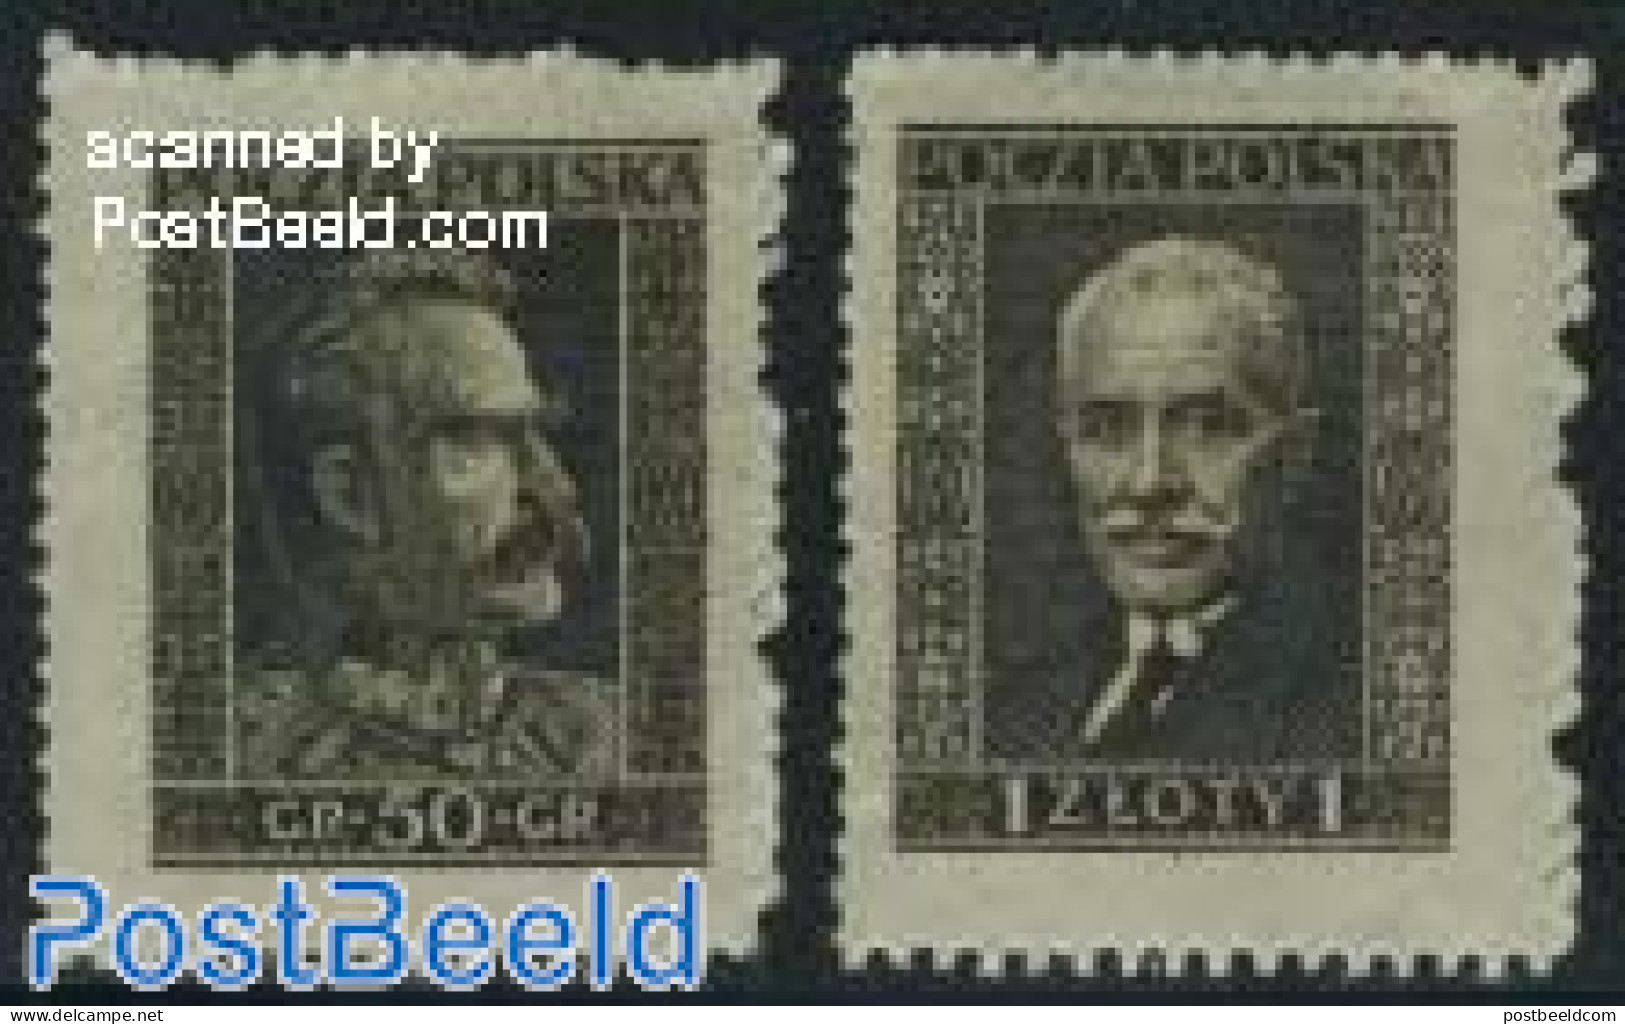 Poland 1928 Warzawa Stamp Exposition 2v, Mint NH, Philately - Ungebraucht